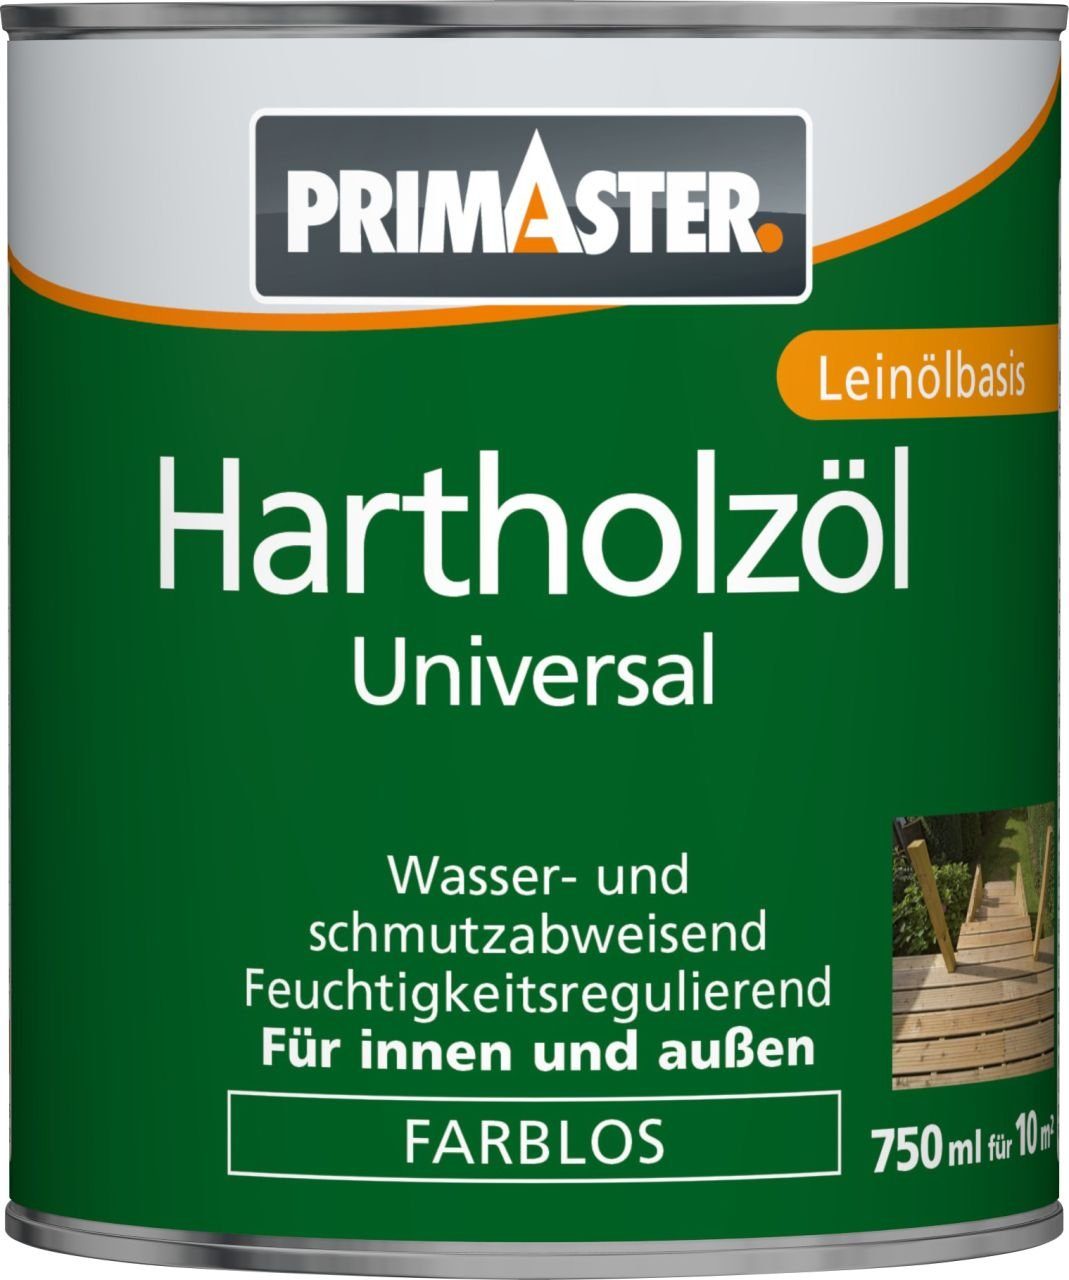 Primaster ml Universal Primaster Hartholzöl farblos Hartholzöl 750